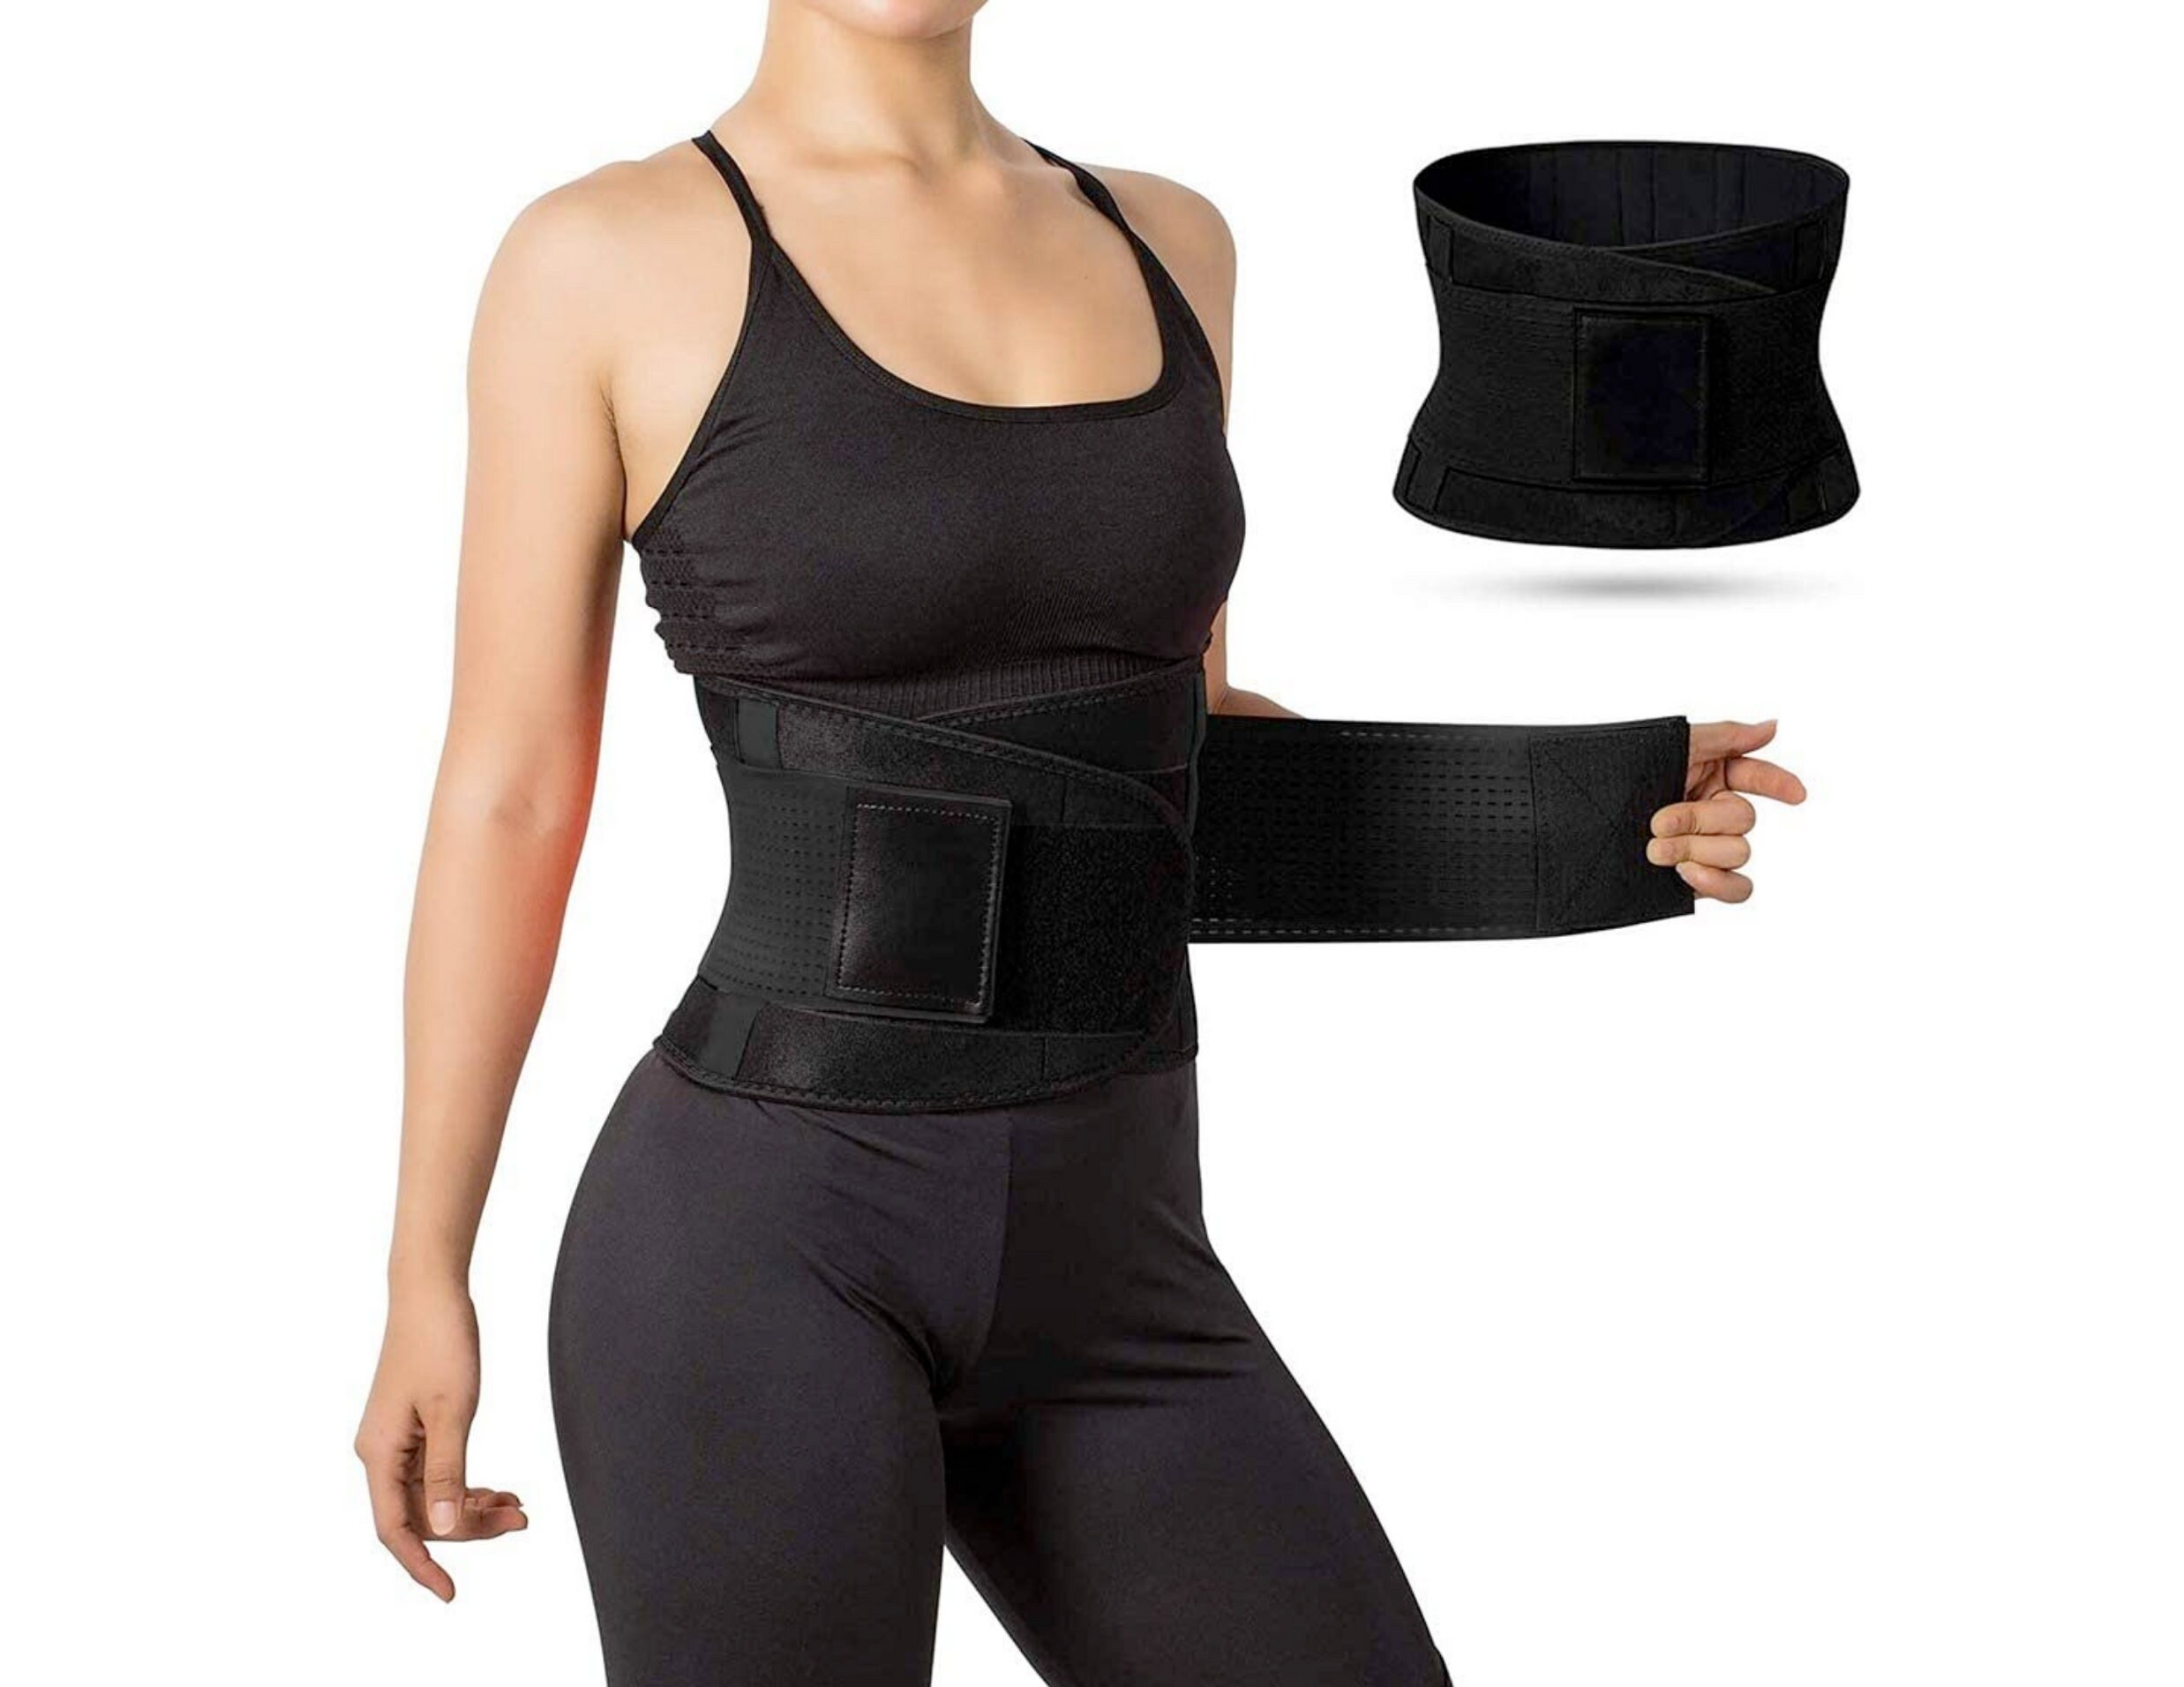 Women Body Slimmer Fat Burner Waist Trainer Corset Body Shaper Vest Workout Top Black 